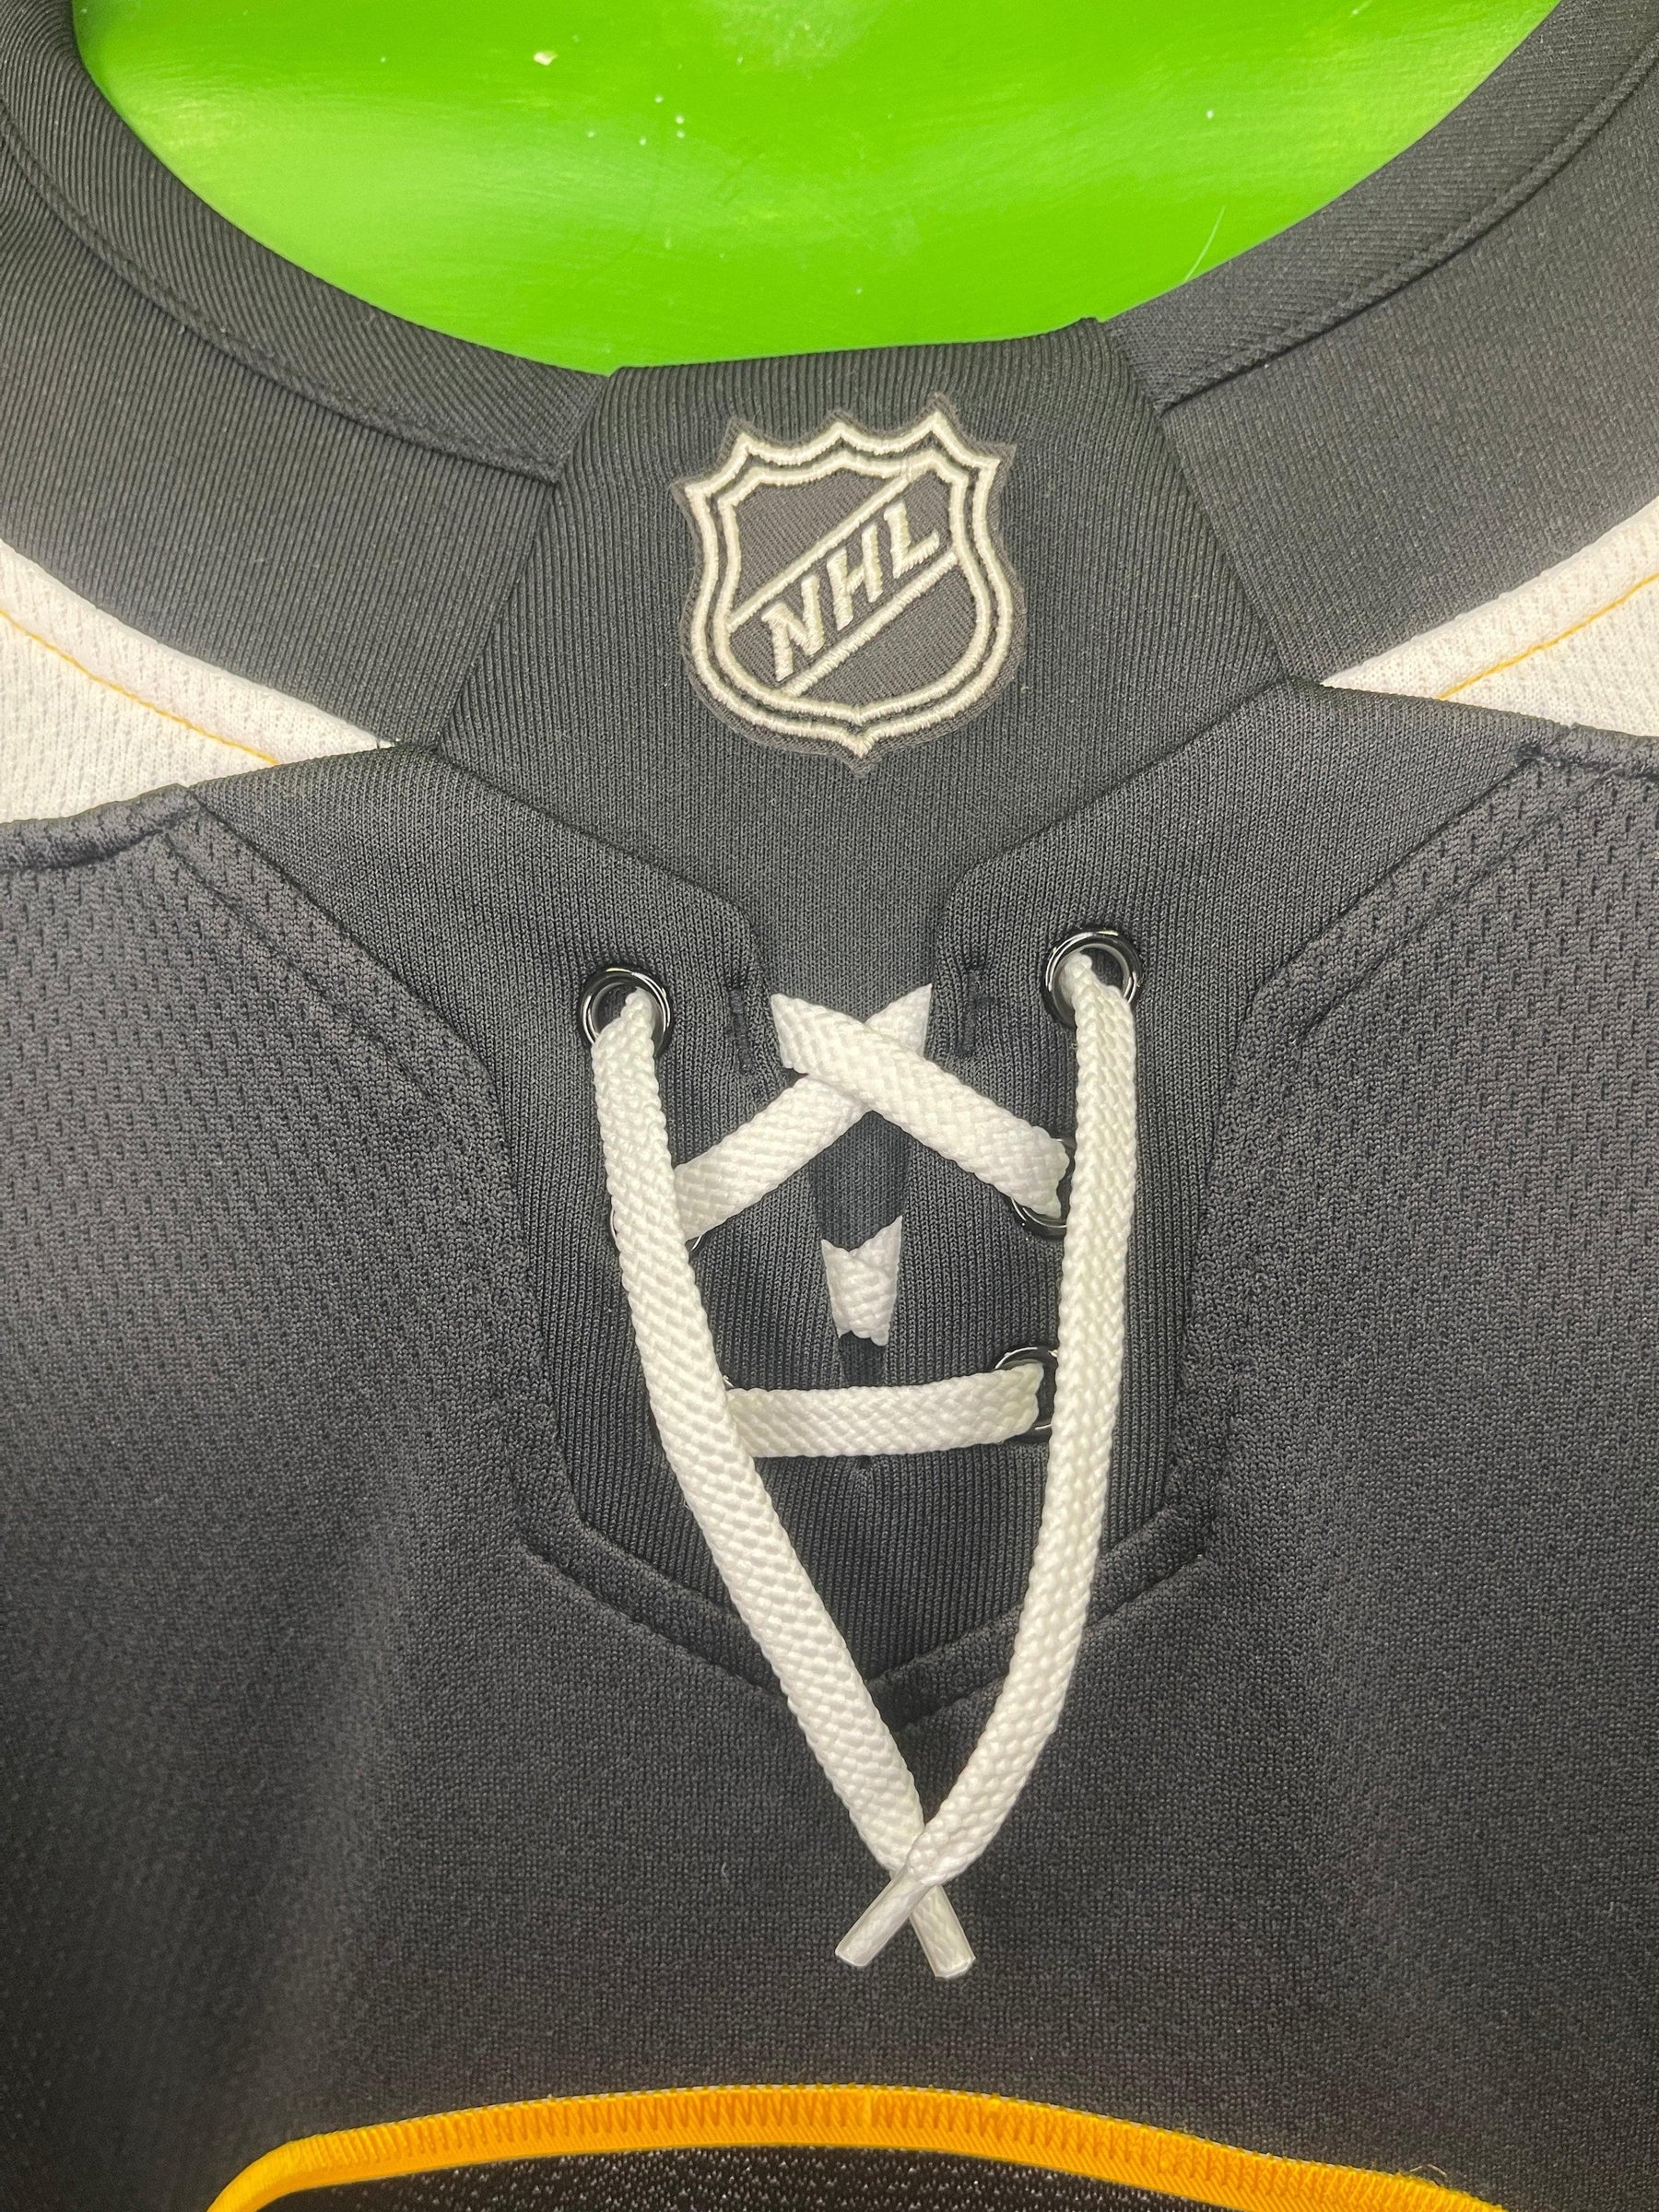 NWT Adidas Ottawa Senators Blank Authentic NHL Hockey Jersey, Size 52